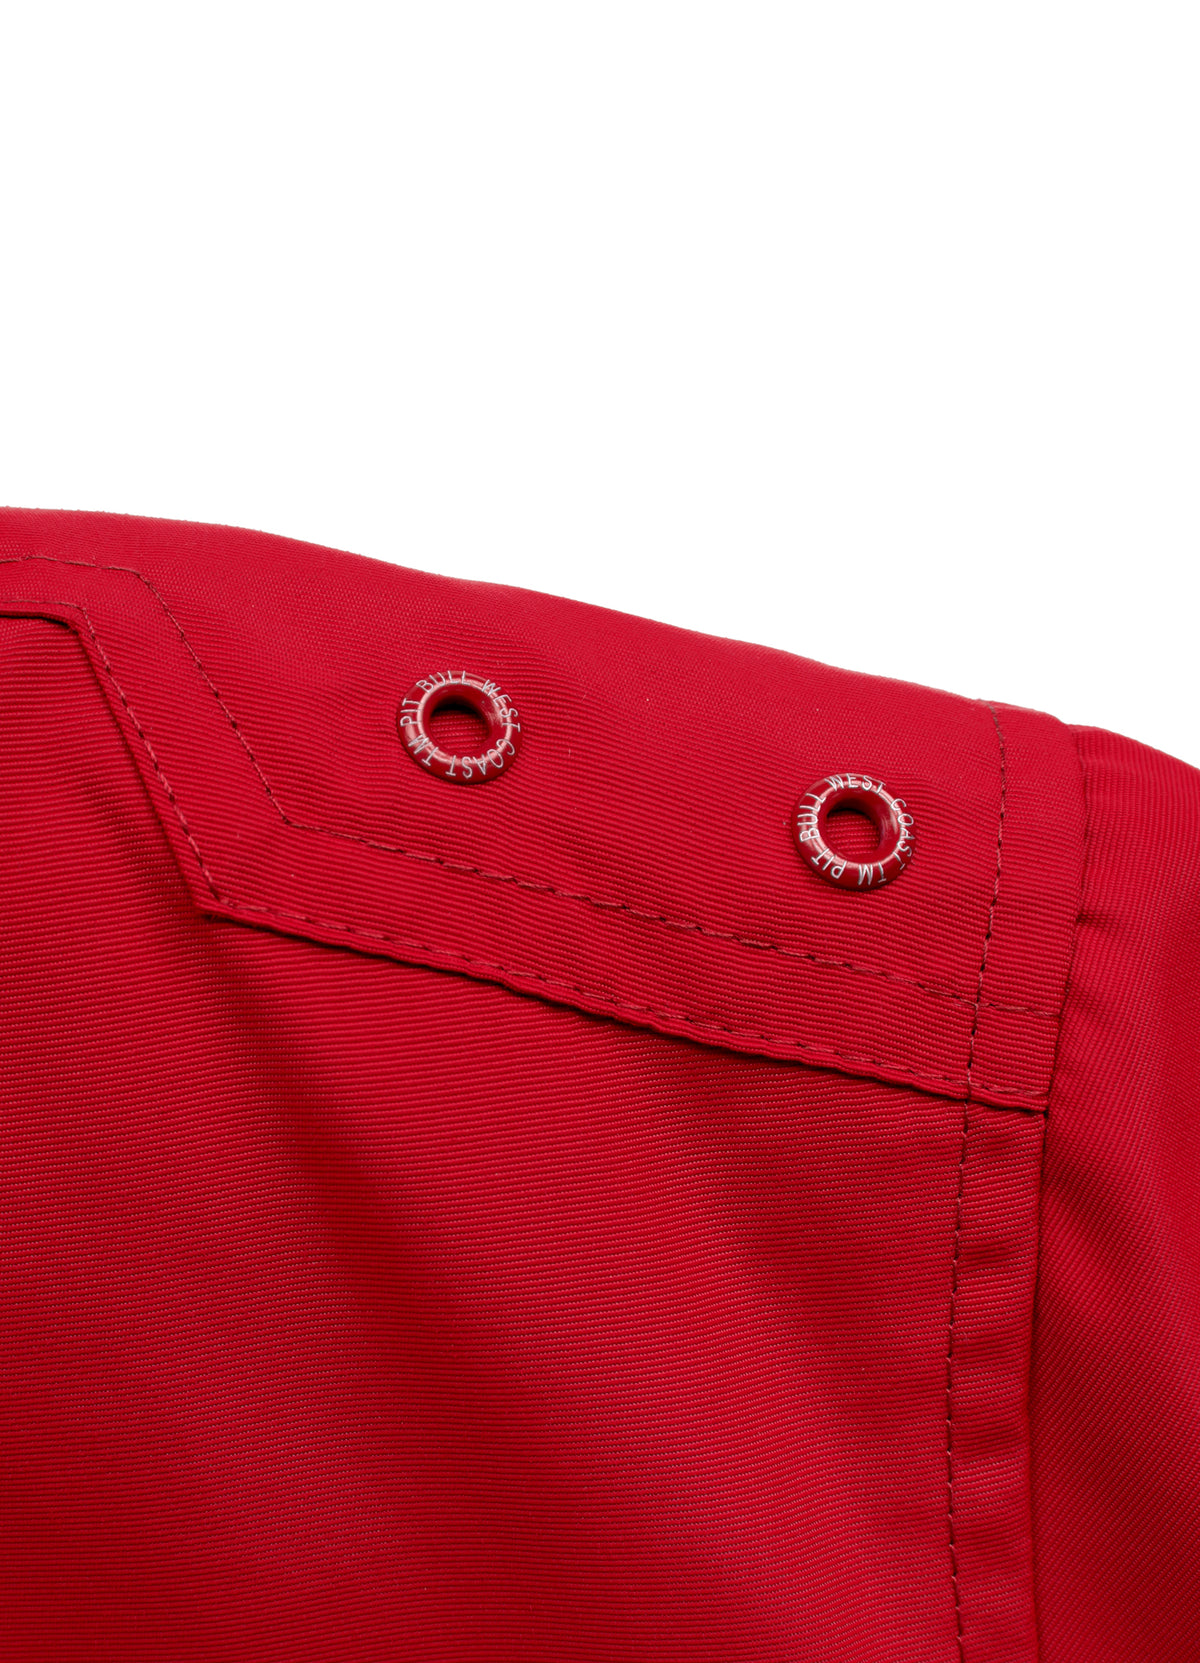 CABRILLO Red Winter Jacket.